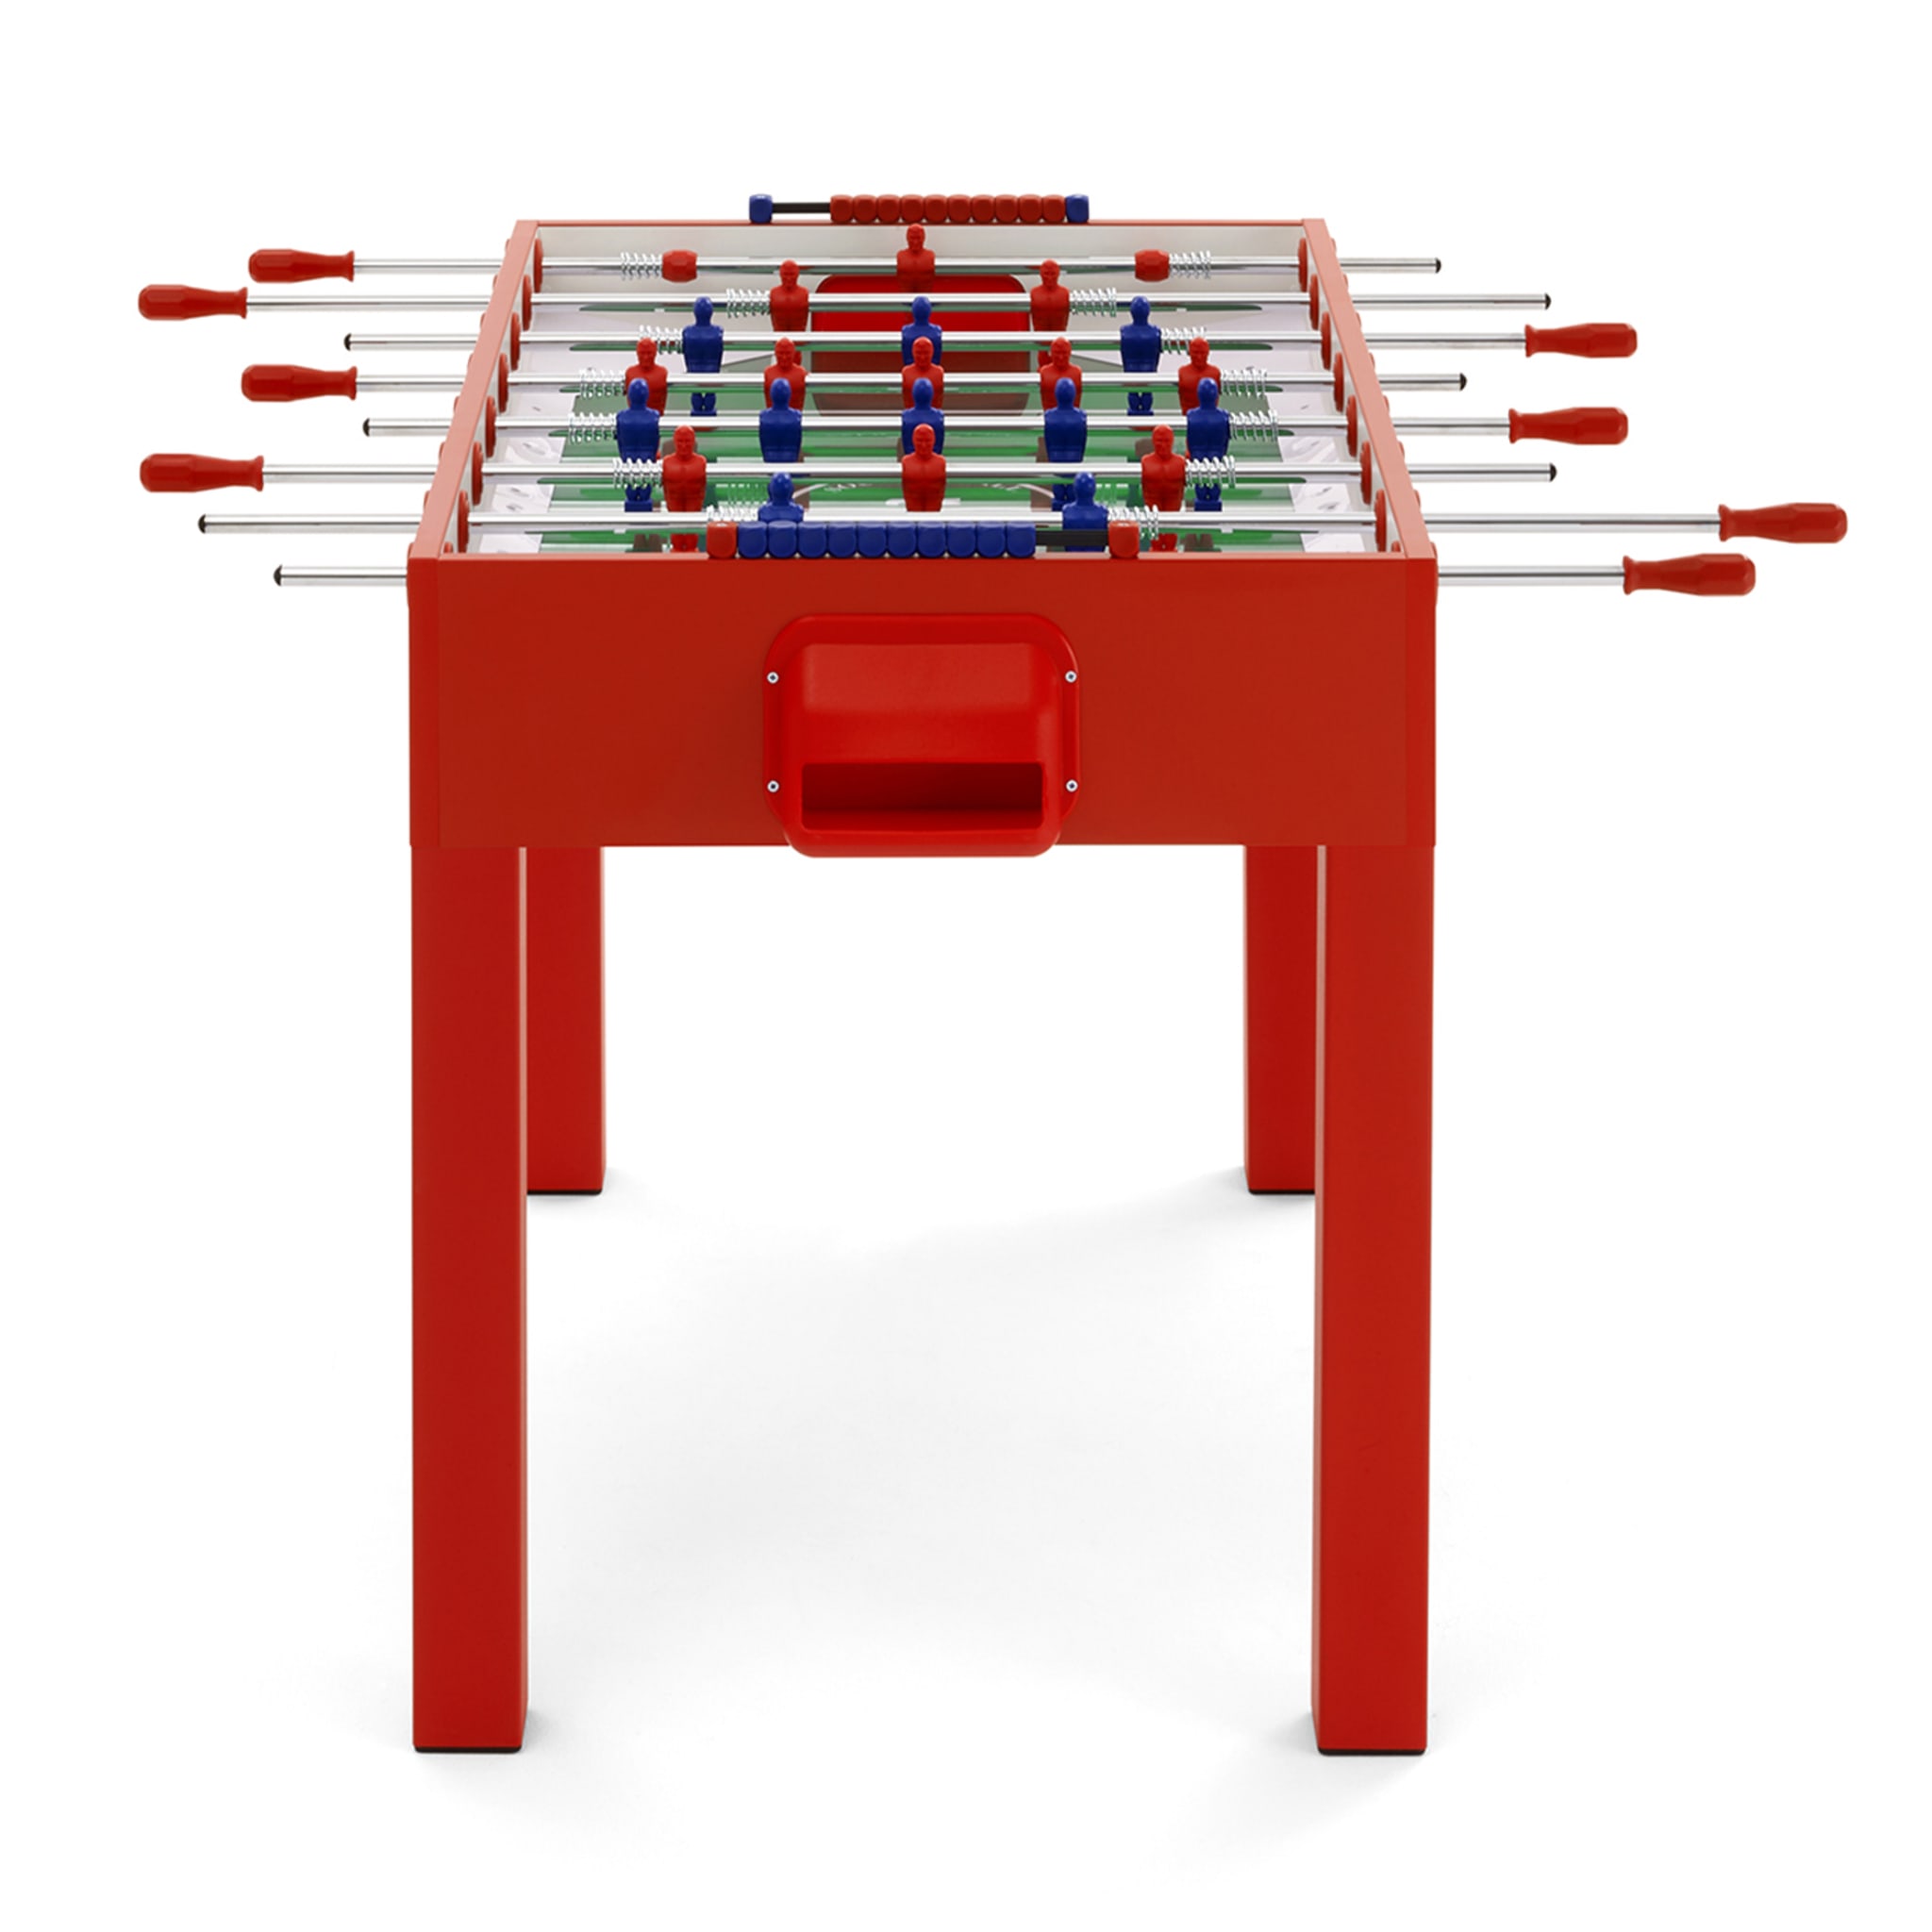 Fido Red Foosball Table by Basaglia + Rota Nodari - Alternative view 2